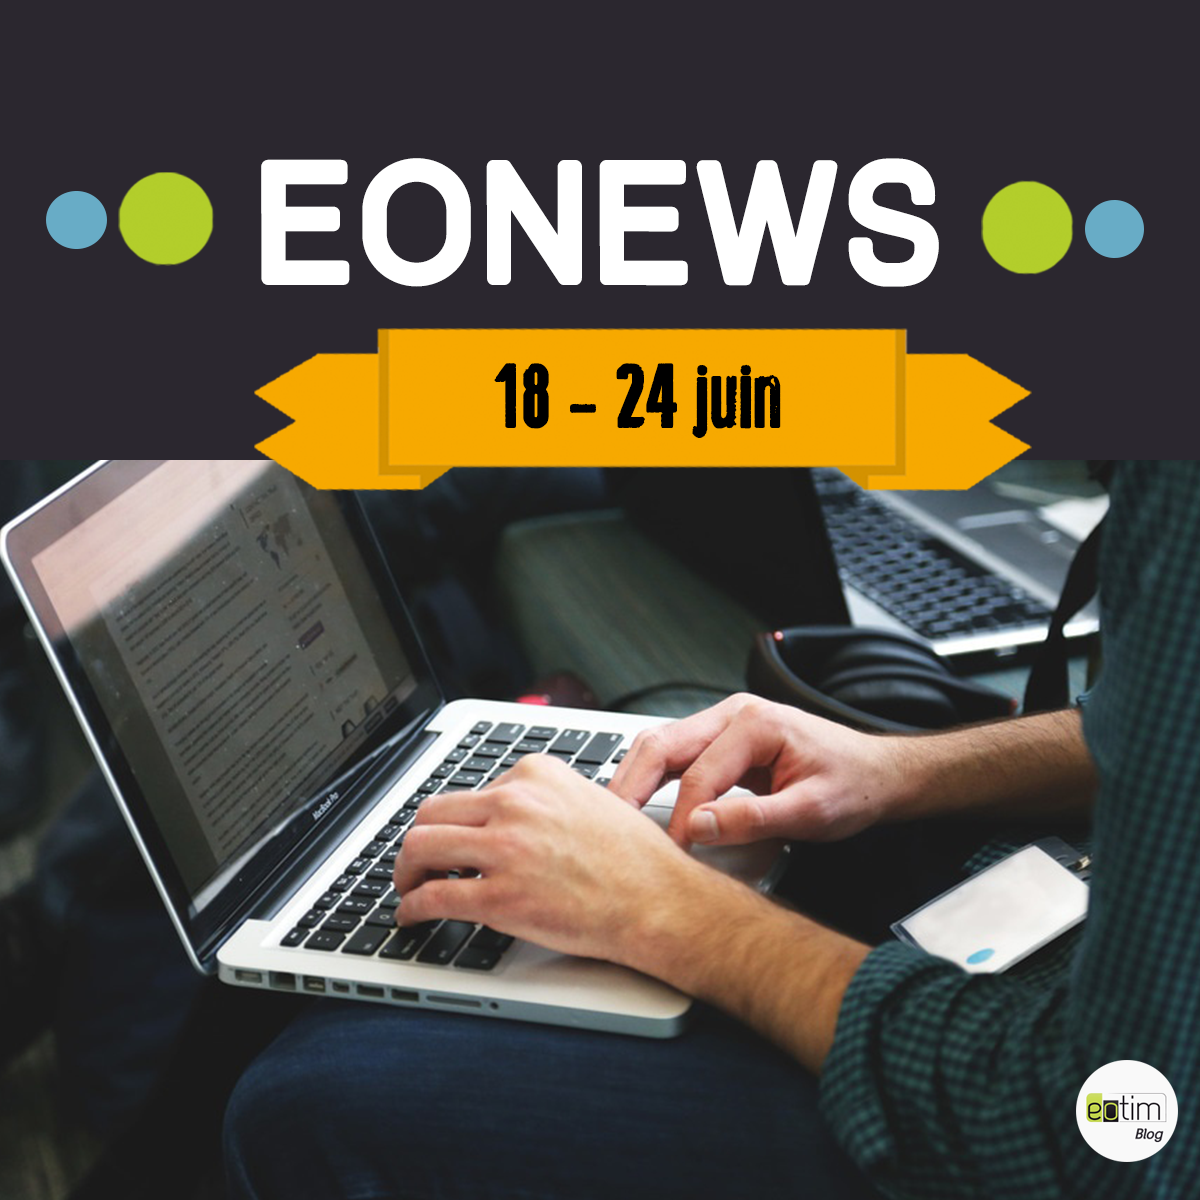 Eonews : l'essentiel de la semaine (18-24 juin)